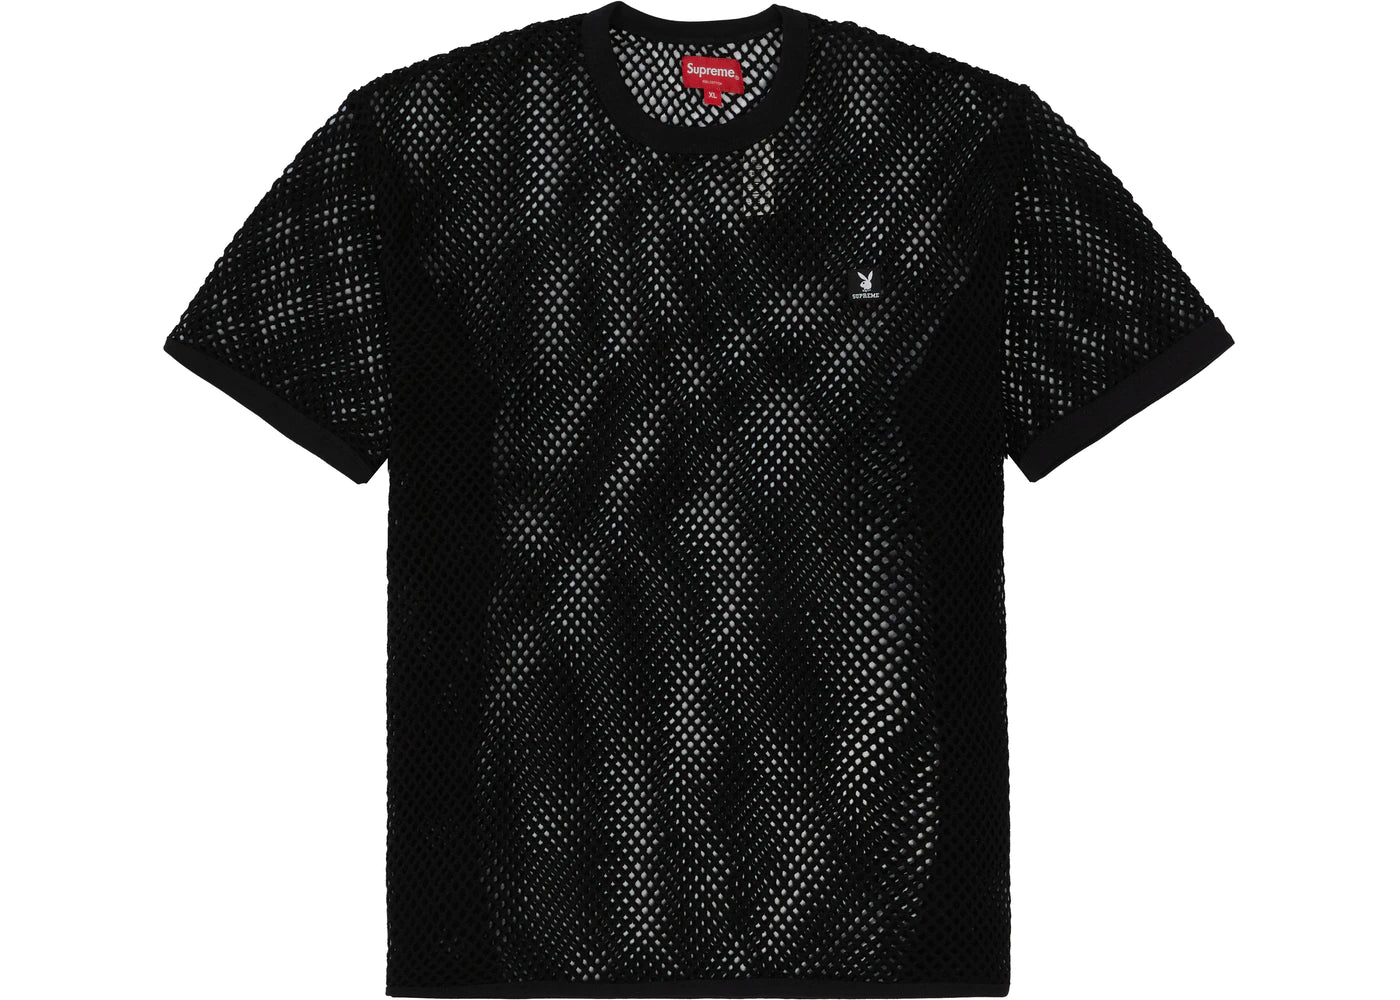 Buy Supreme x Playboy String Short-Sleeve Top 'Black' - SS21KN16 BLACK -  Black